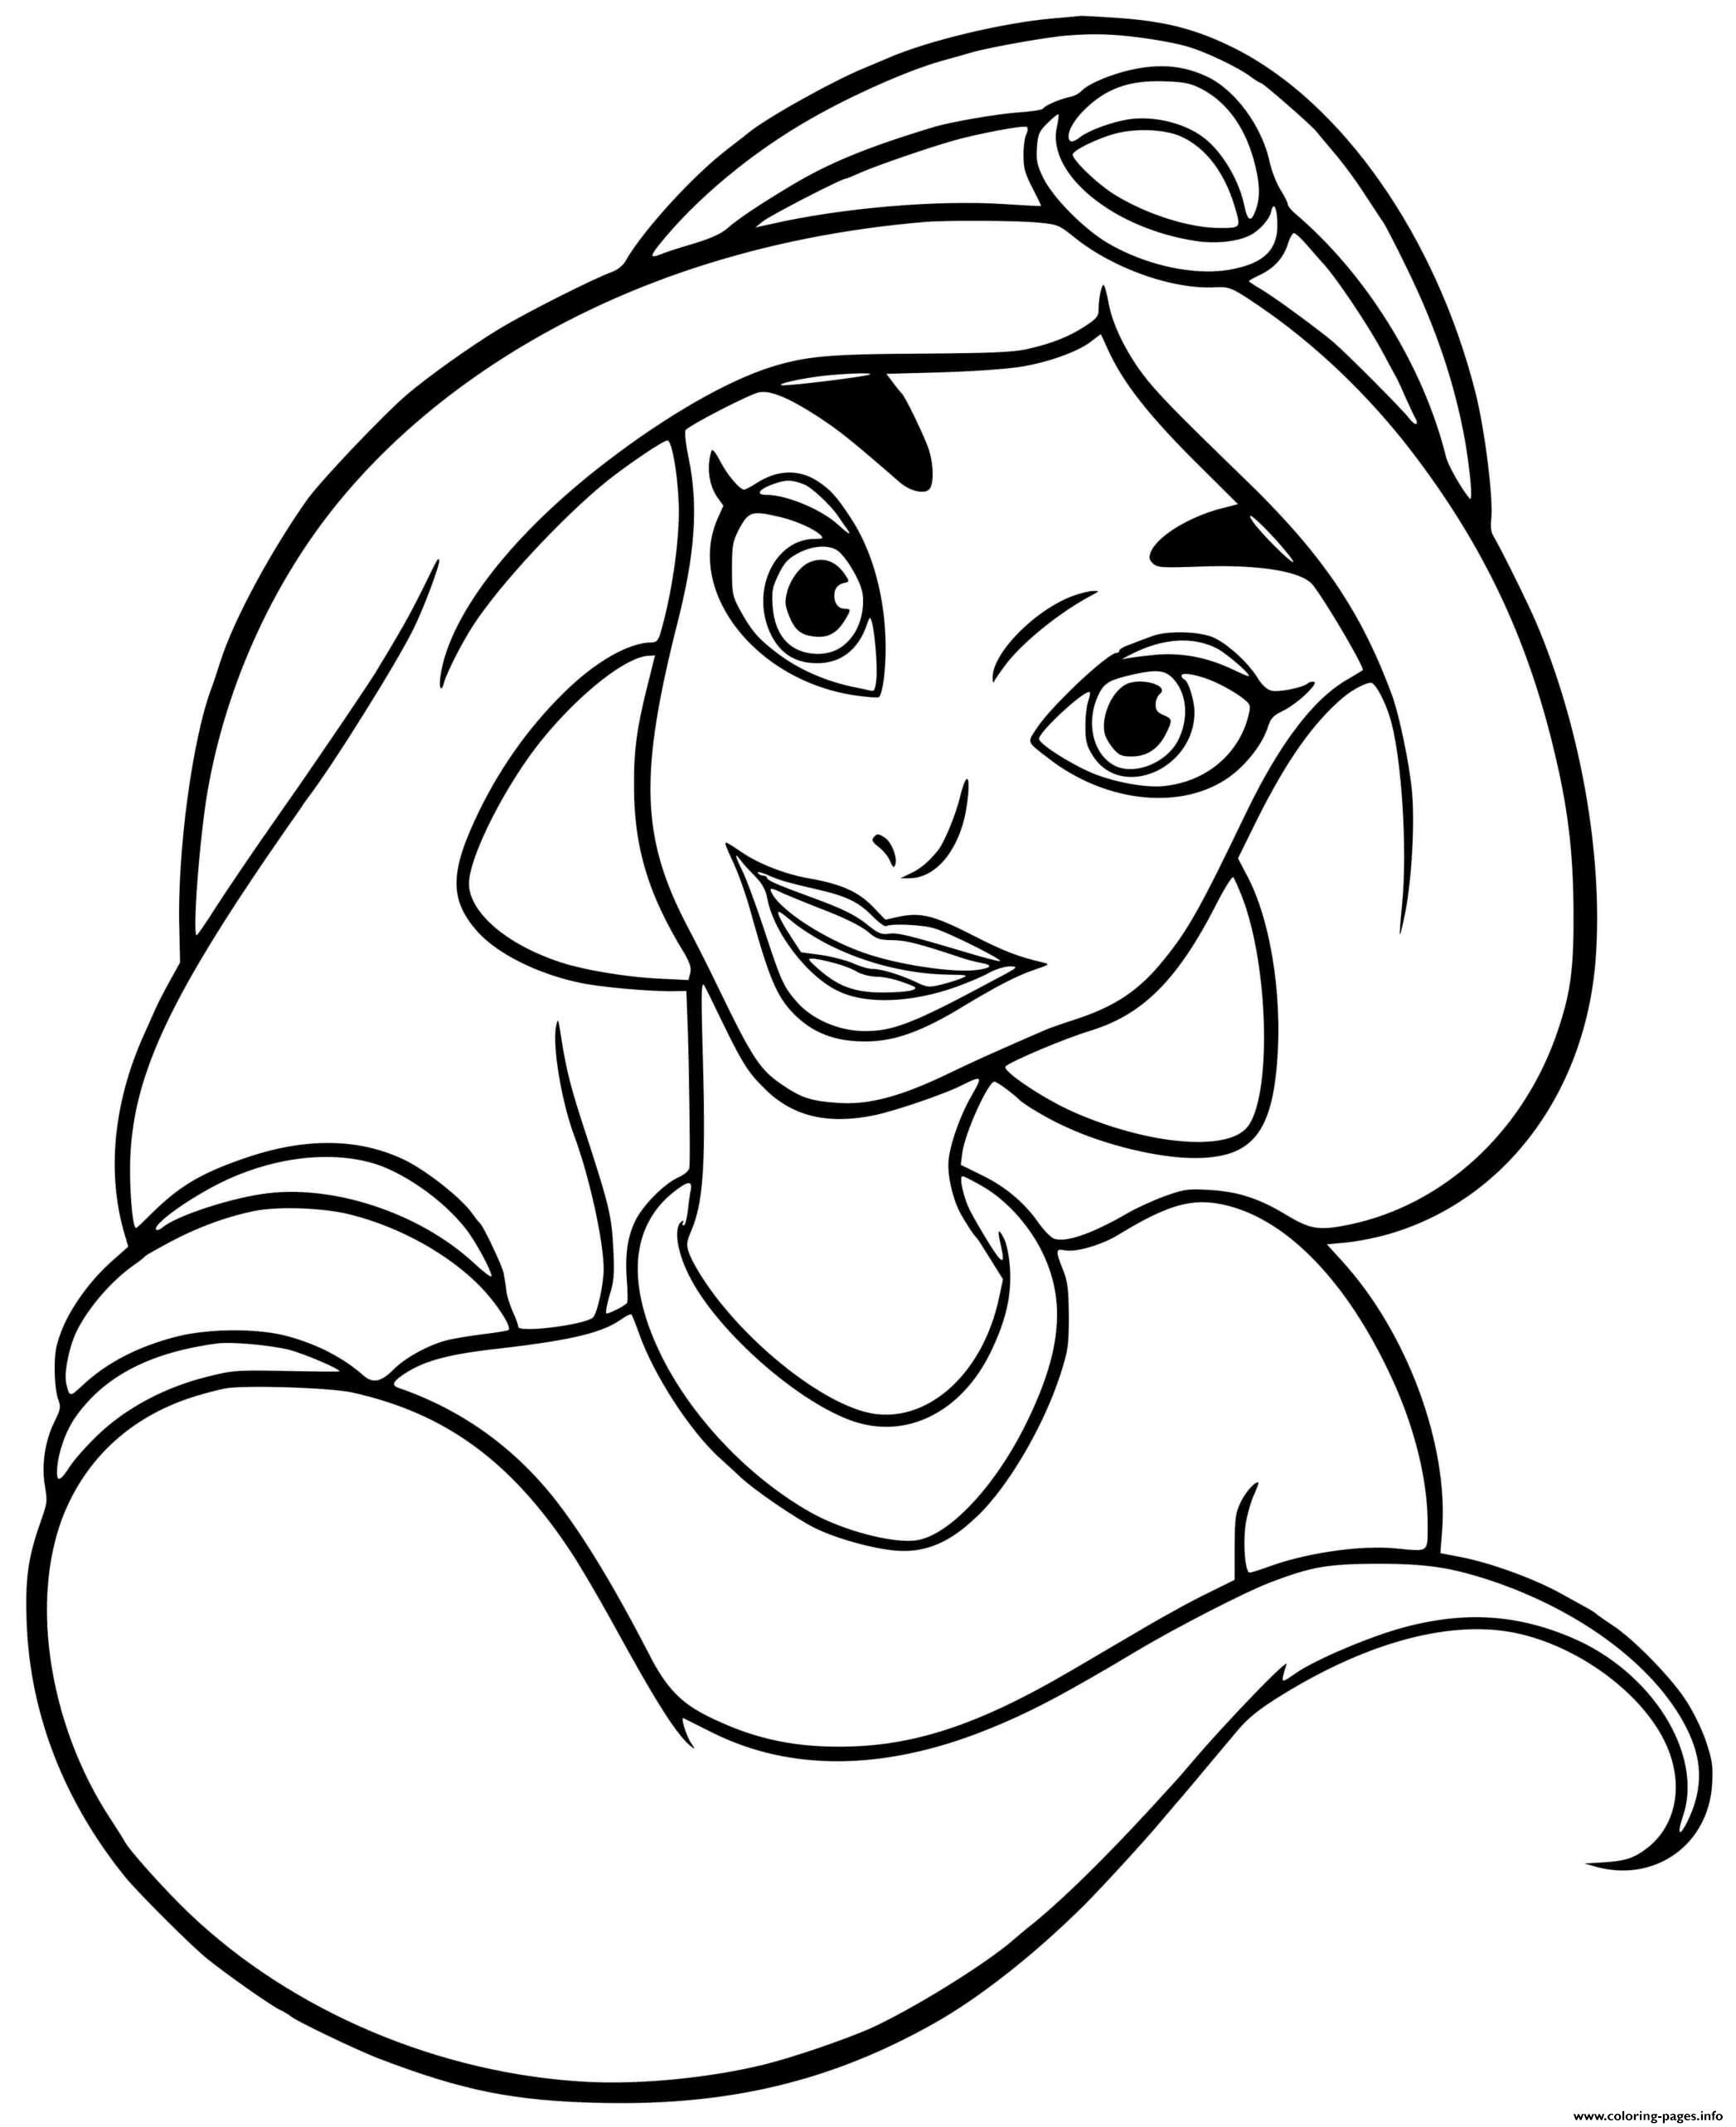 Disney Princess Jasmine From Aladdin coloring